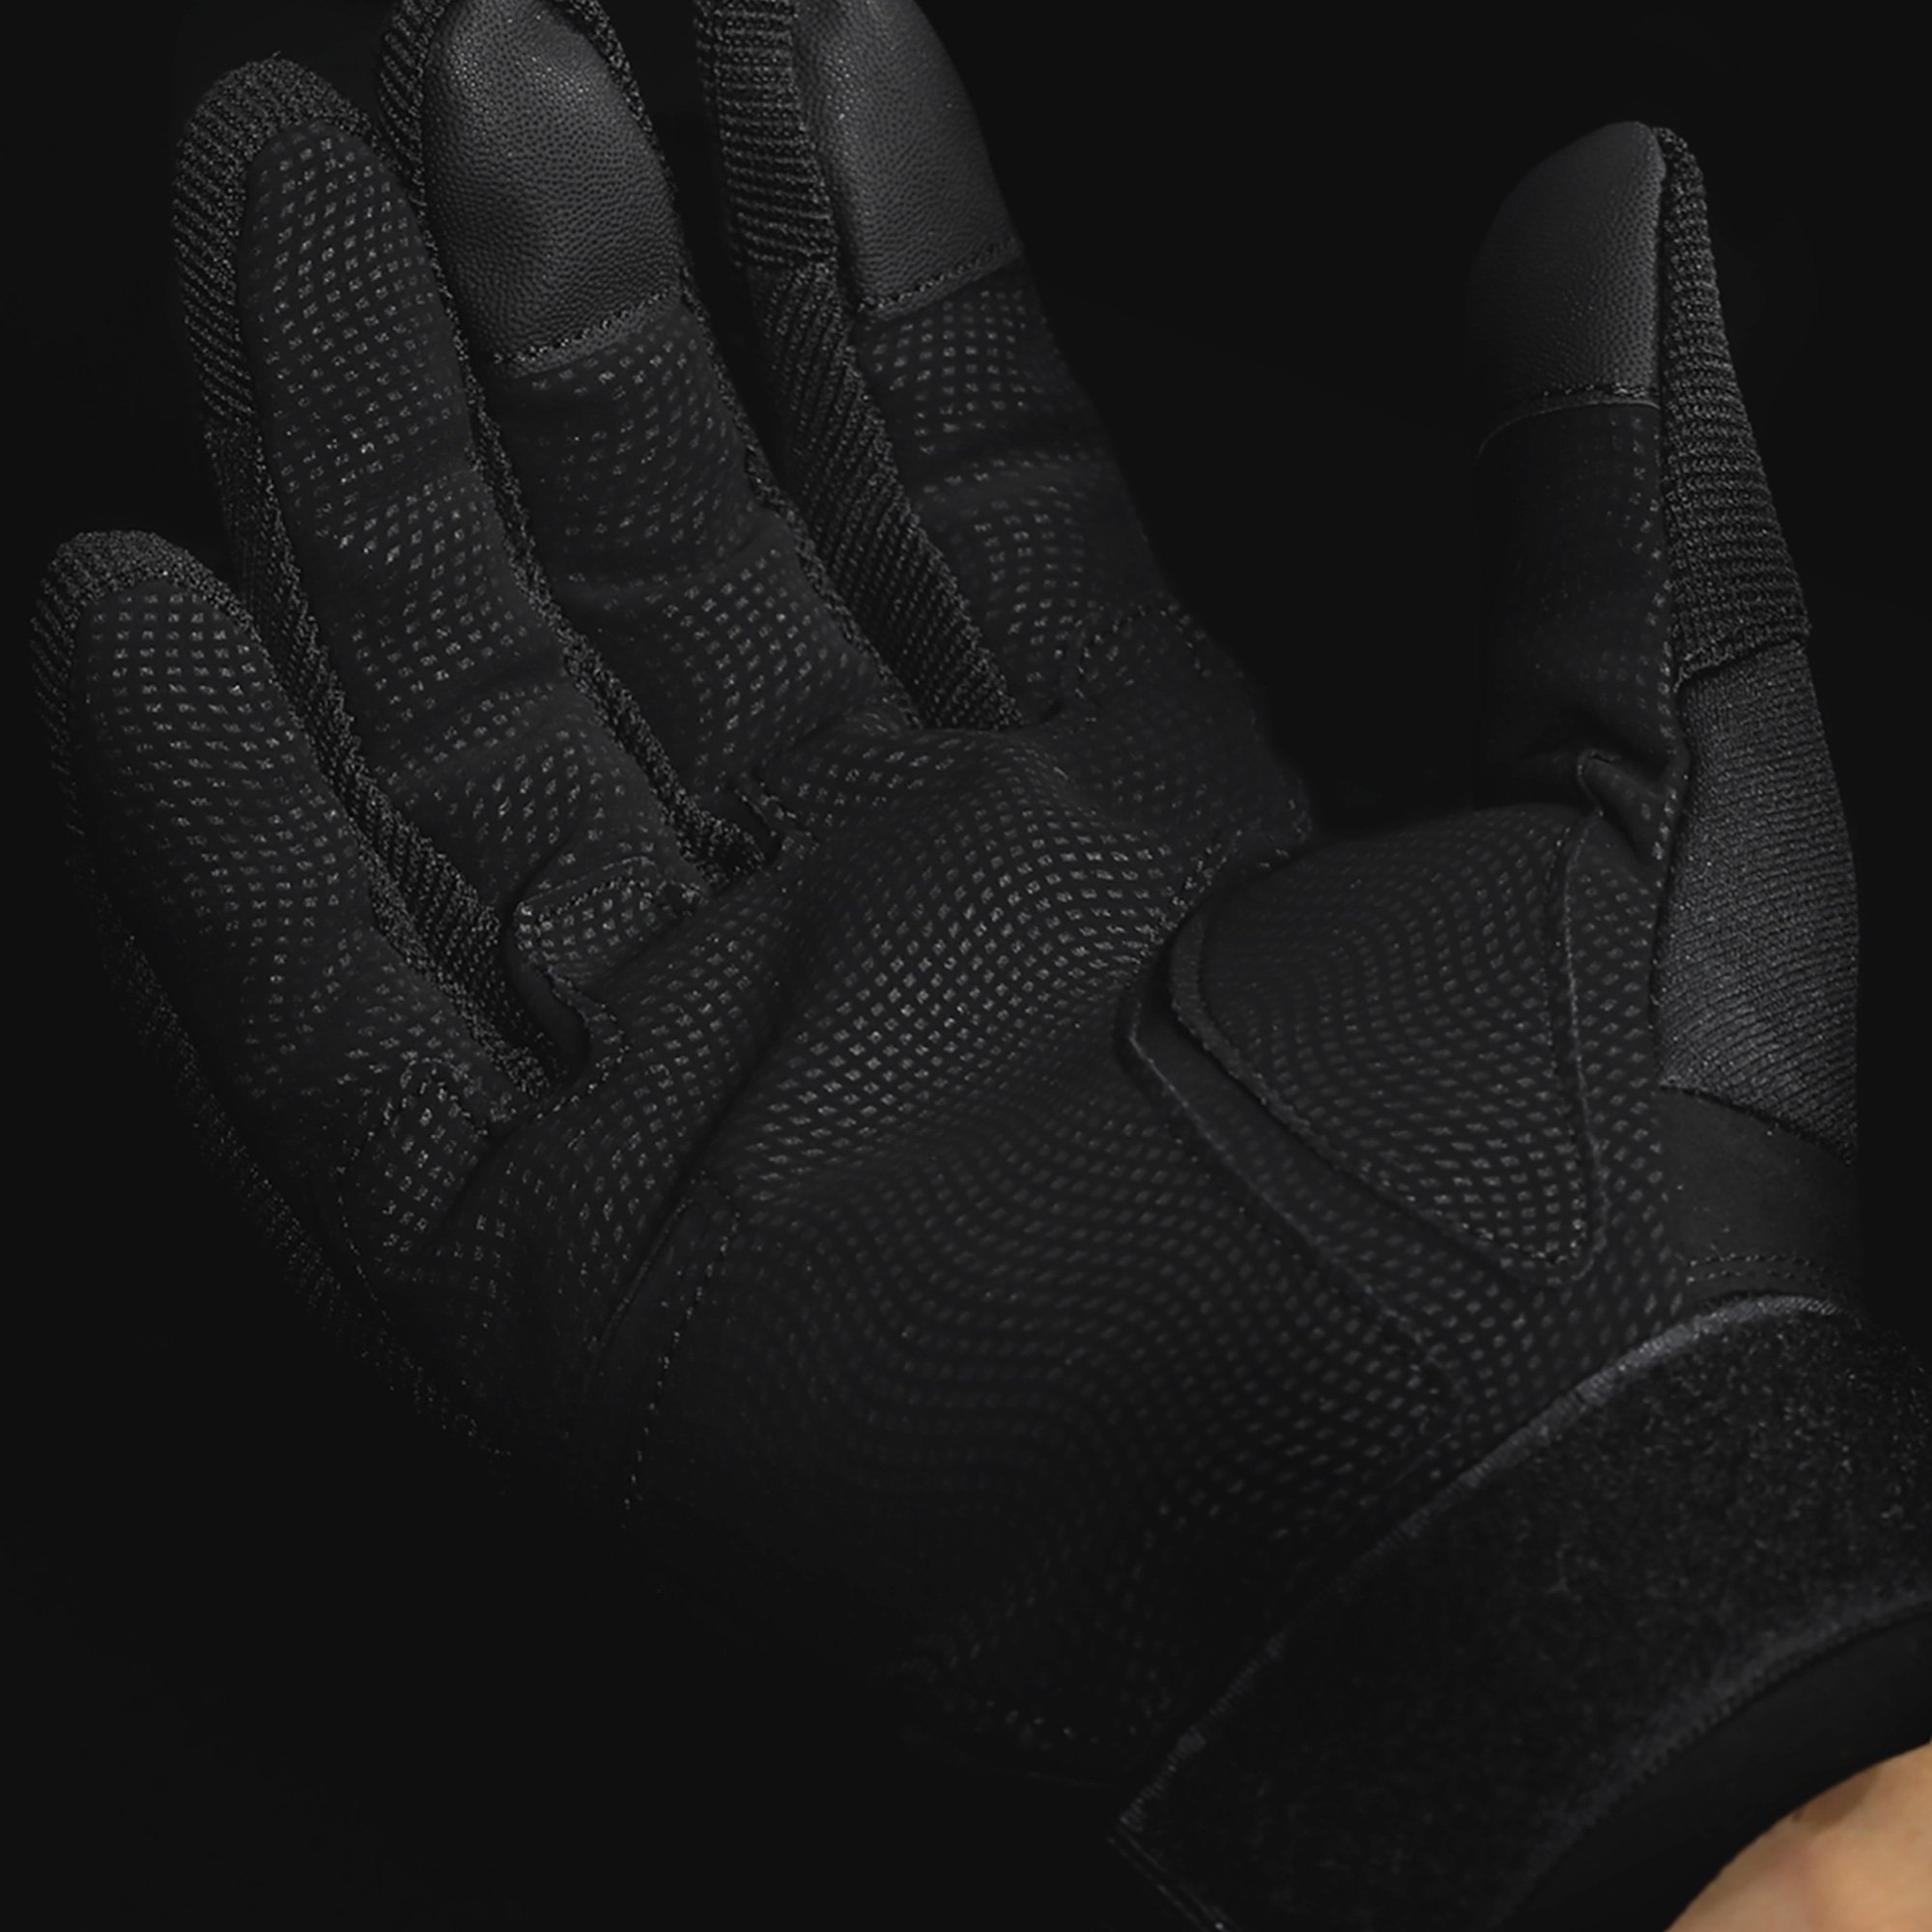 Mission Made Hellfox Gloves | Work Boots Superstore | WorkBoots.com